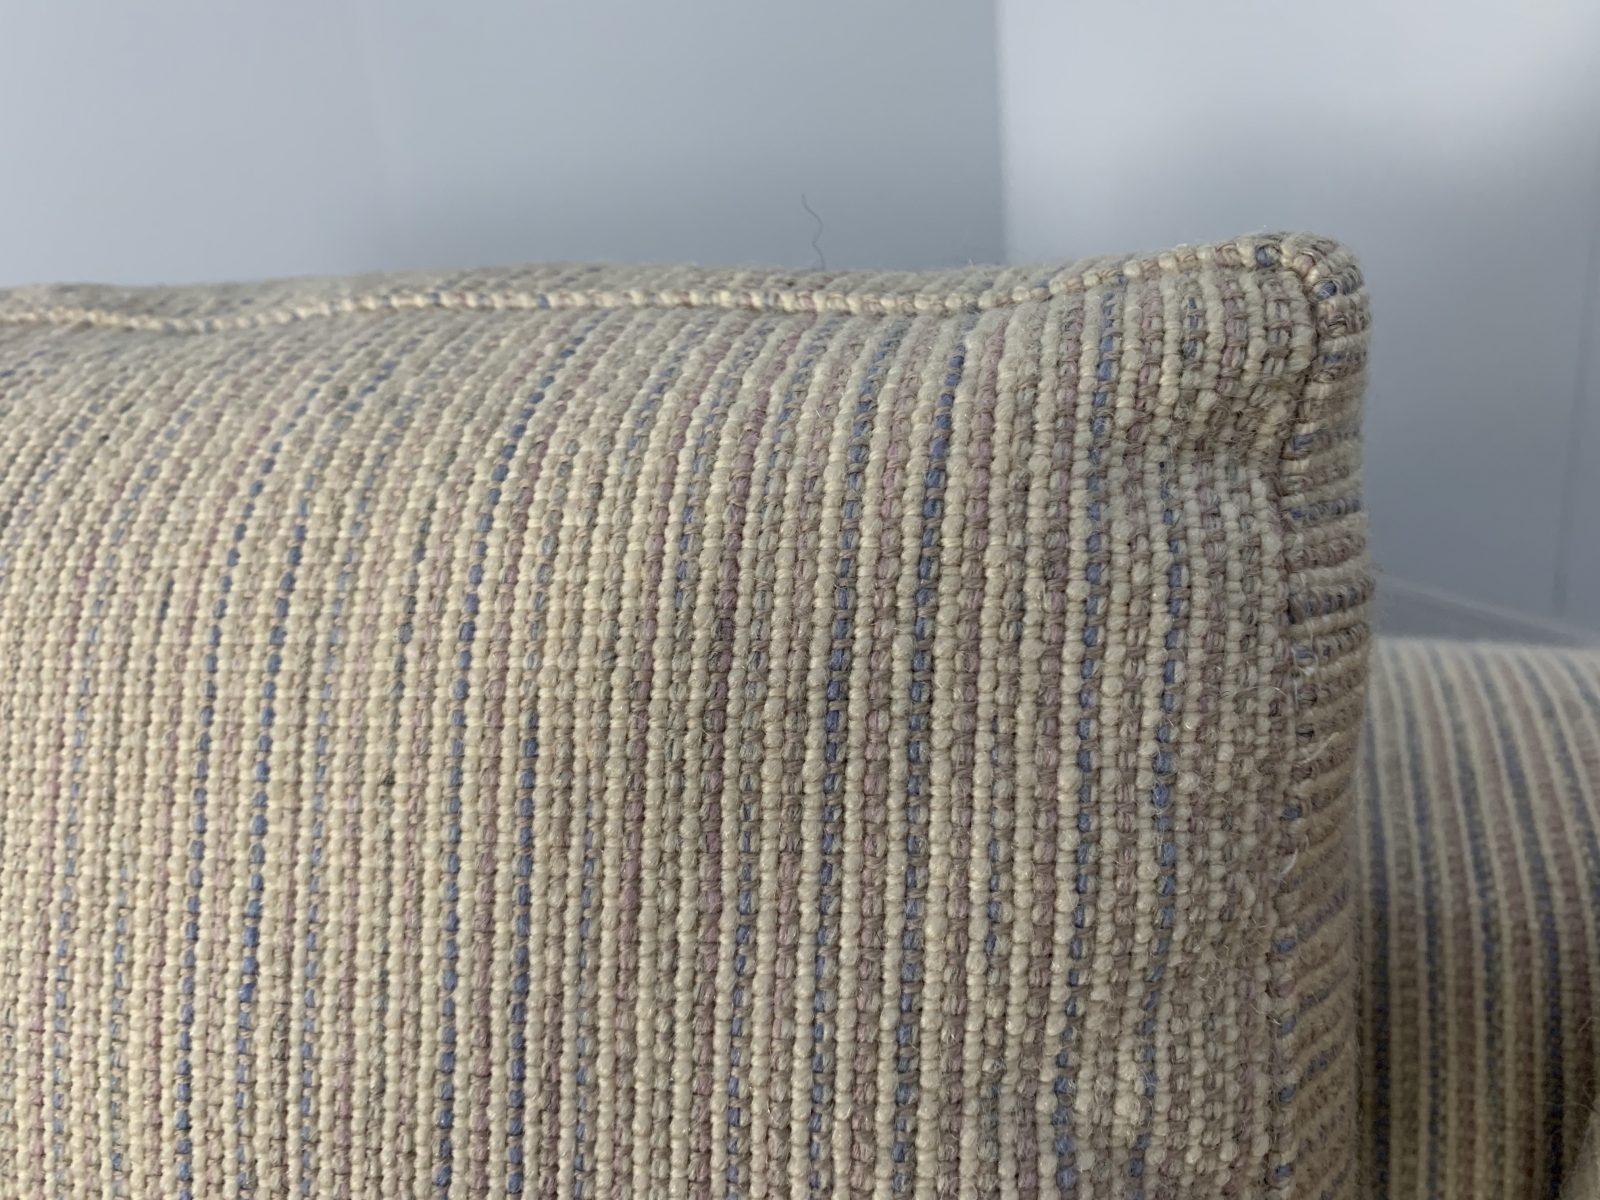 B&B Italia “Charles” L-Shape Sectional Sofa in Stripe Wool For Sale 6